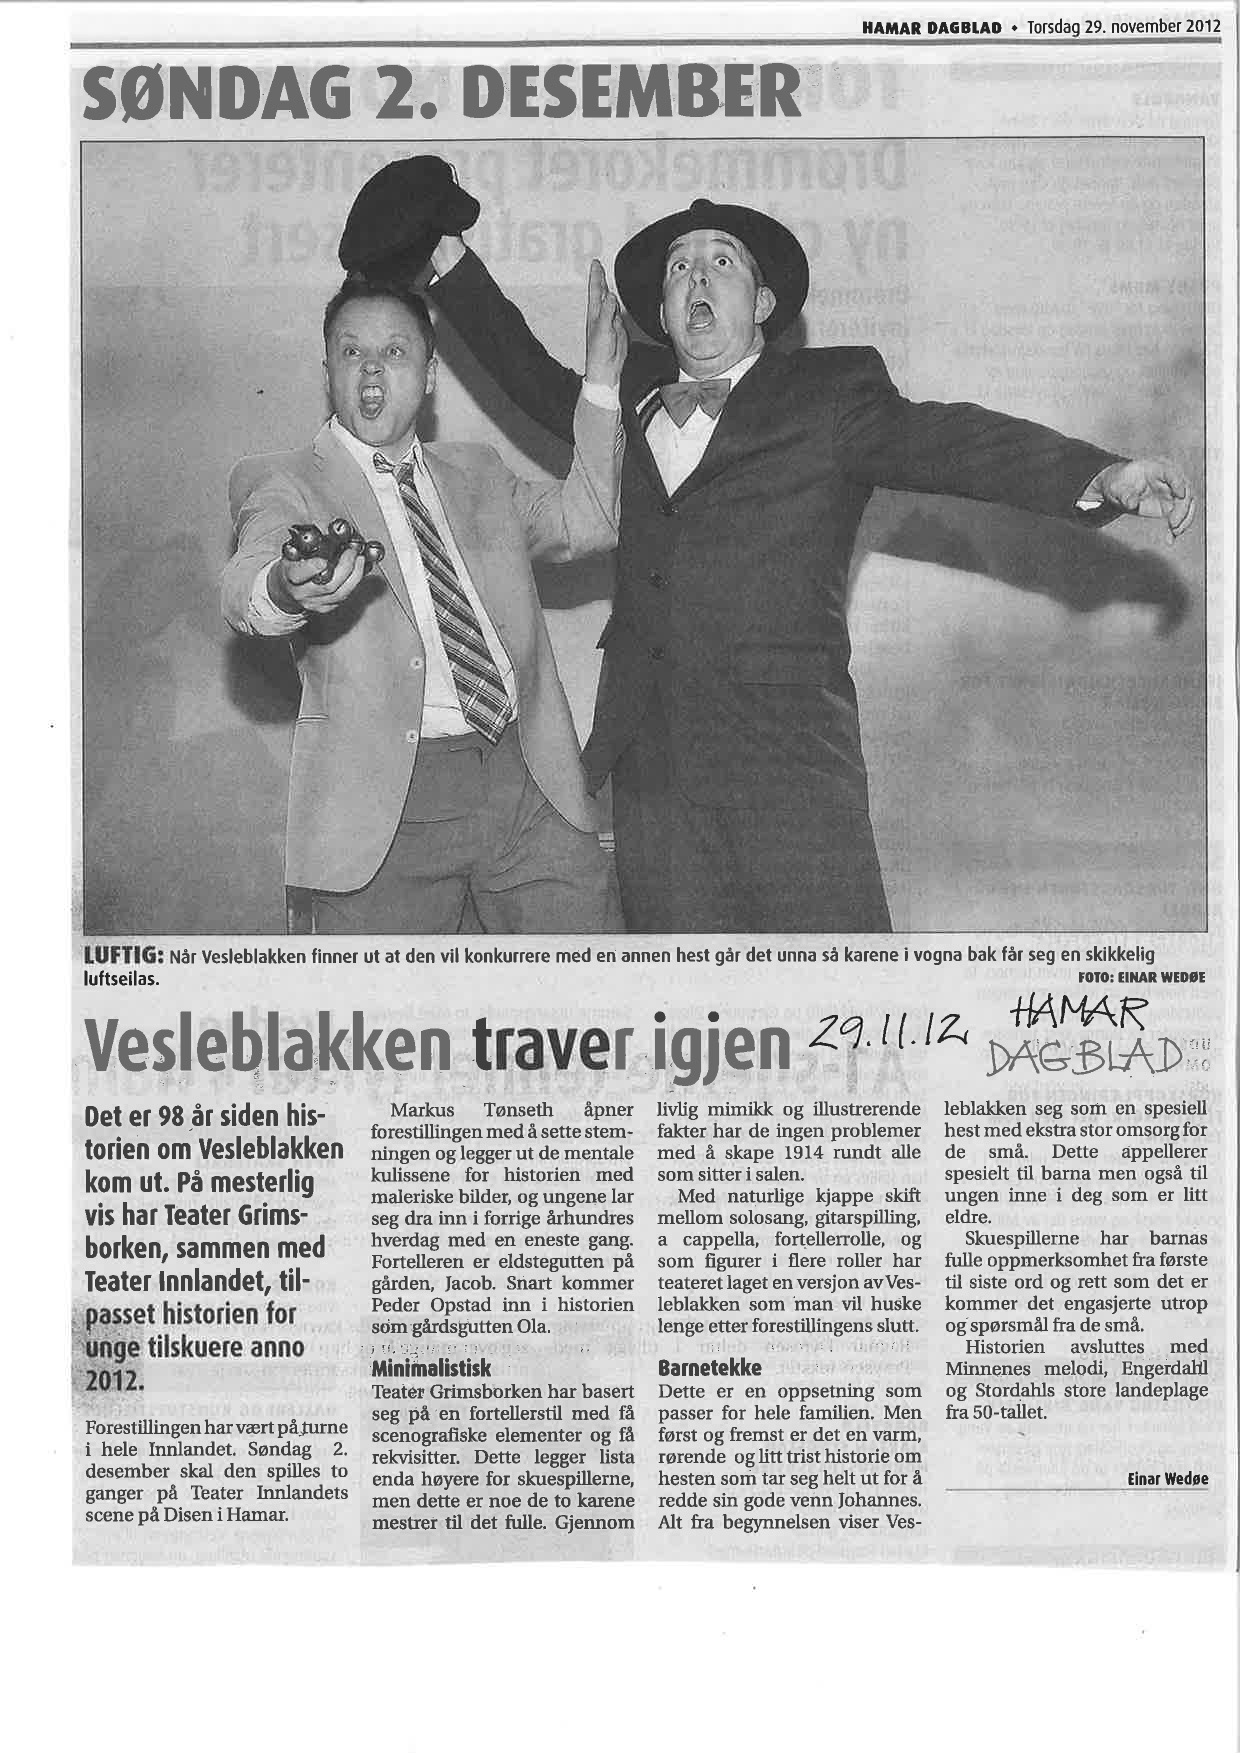 Nov 29 2012 Hamar Dagblad.jpg